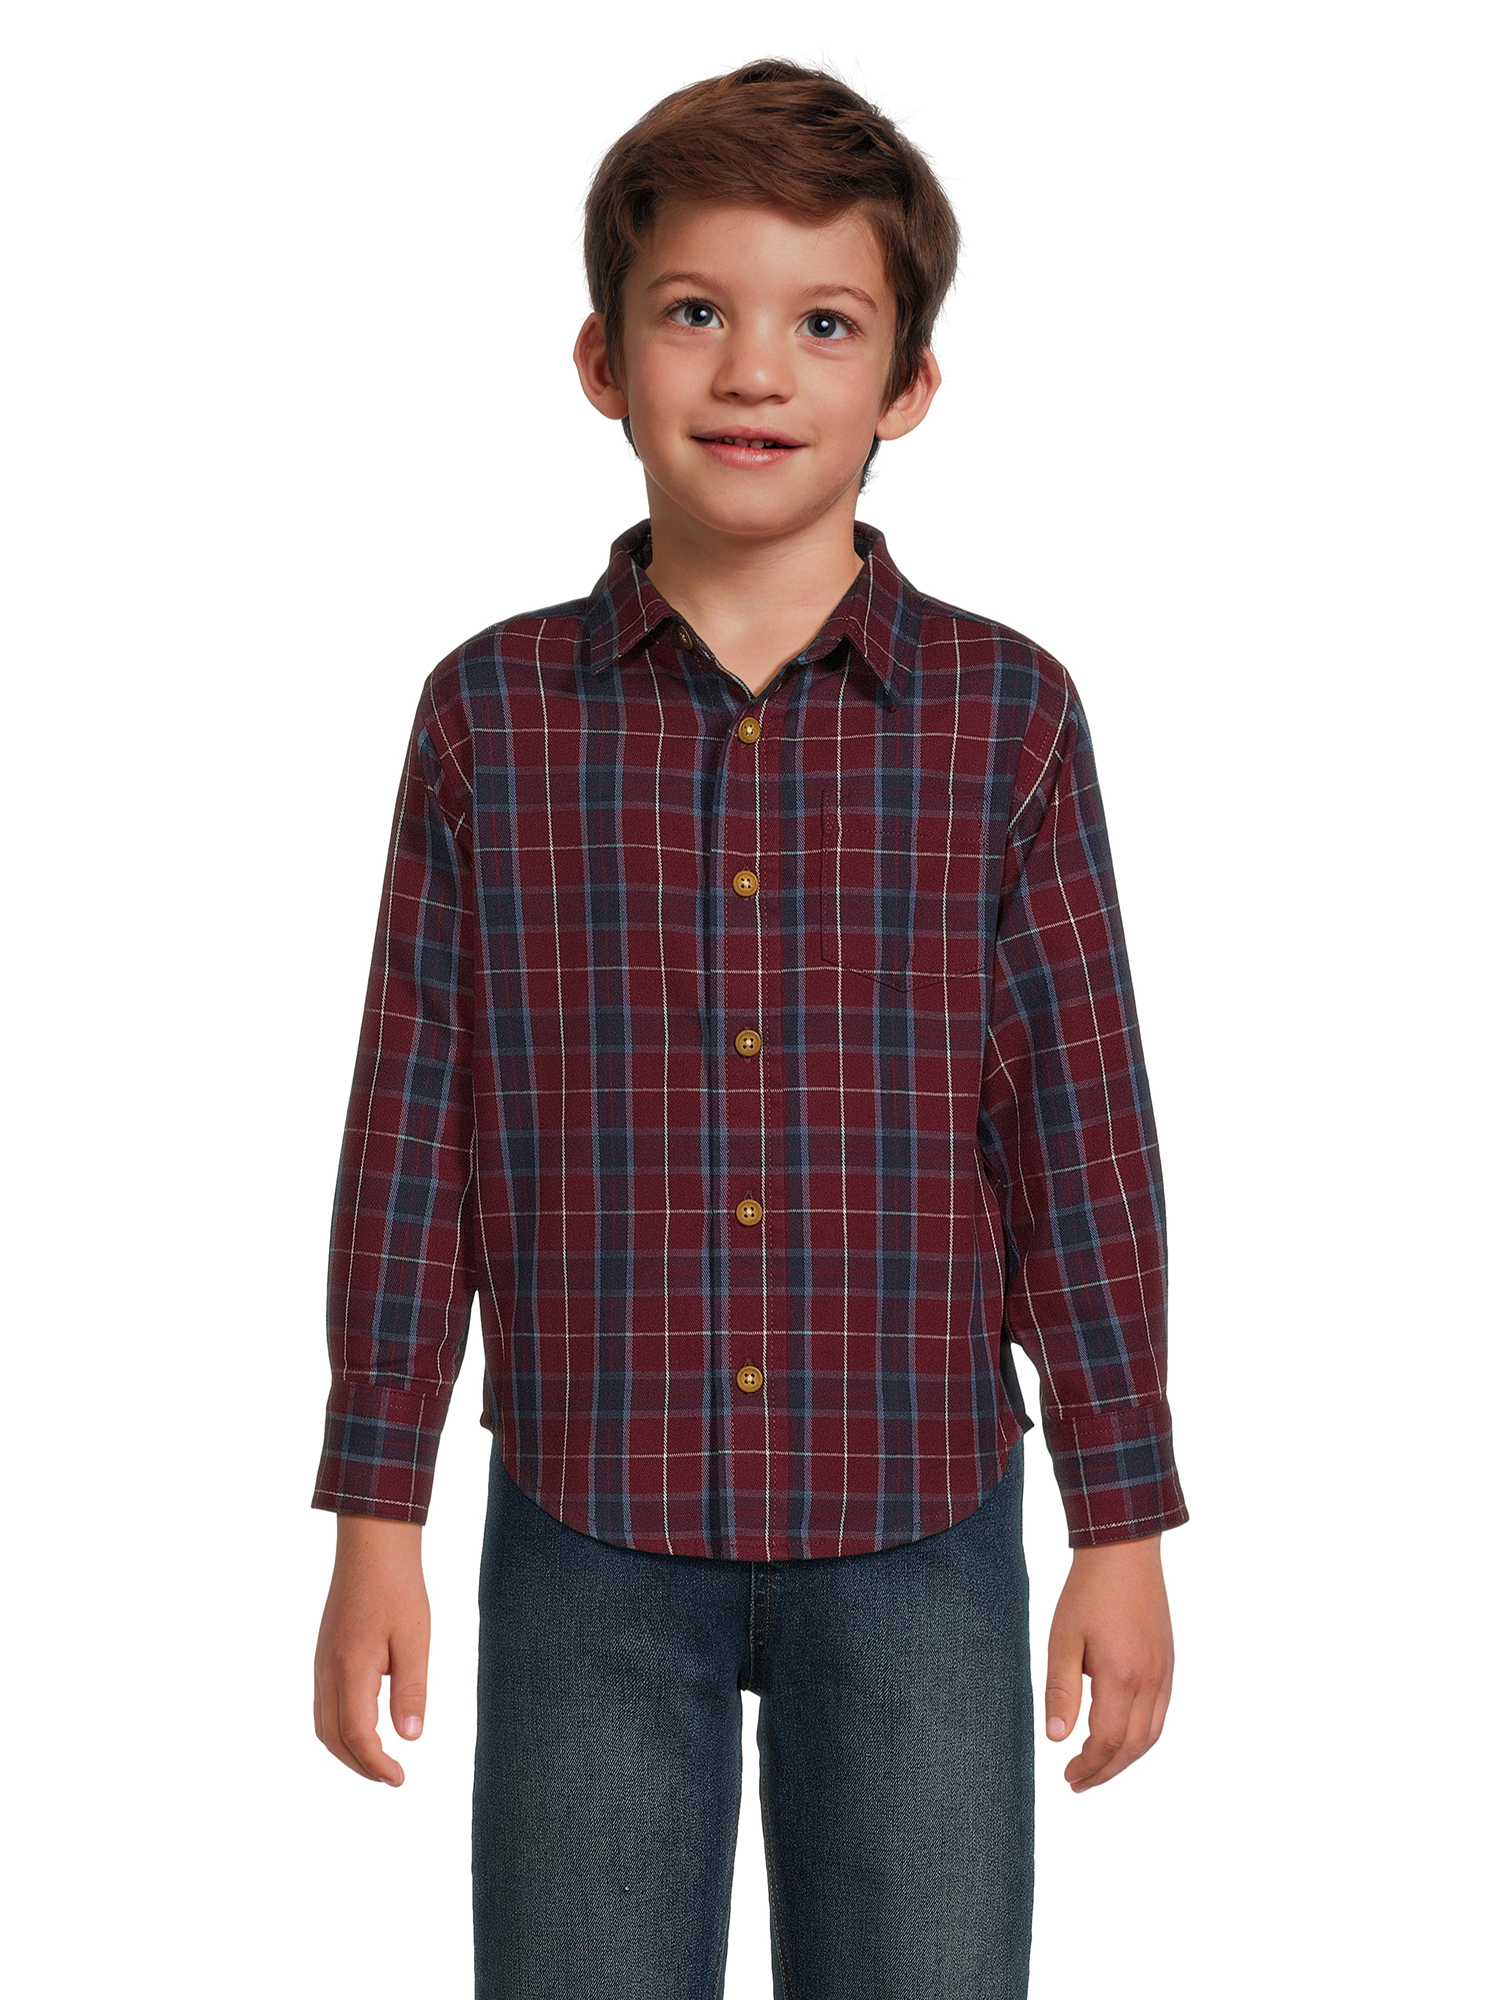 Wrangler Boys Long Sleeve Button-Up Twill Shirt, Sizes 4-18 & Husky - image 1 of 5